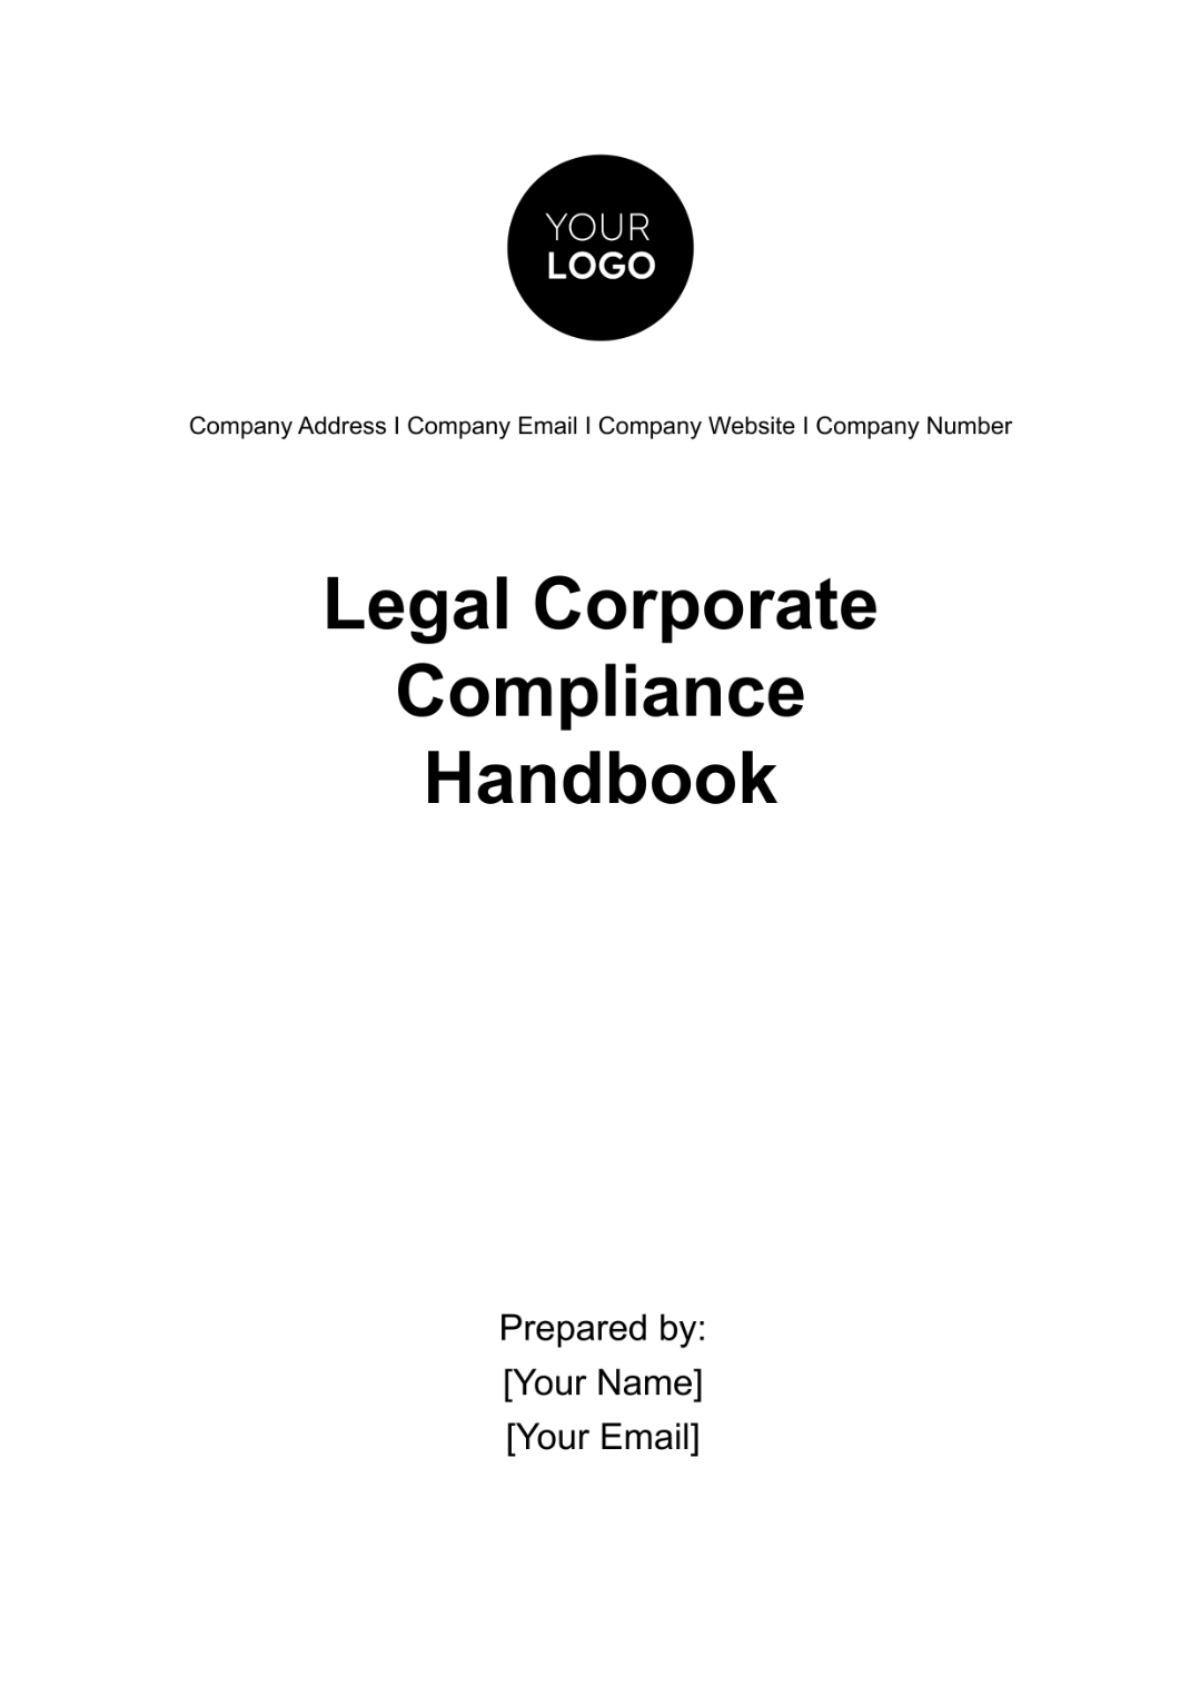 Legal Corporate Compliance Handbook Template